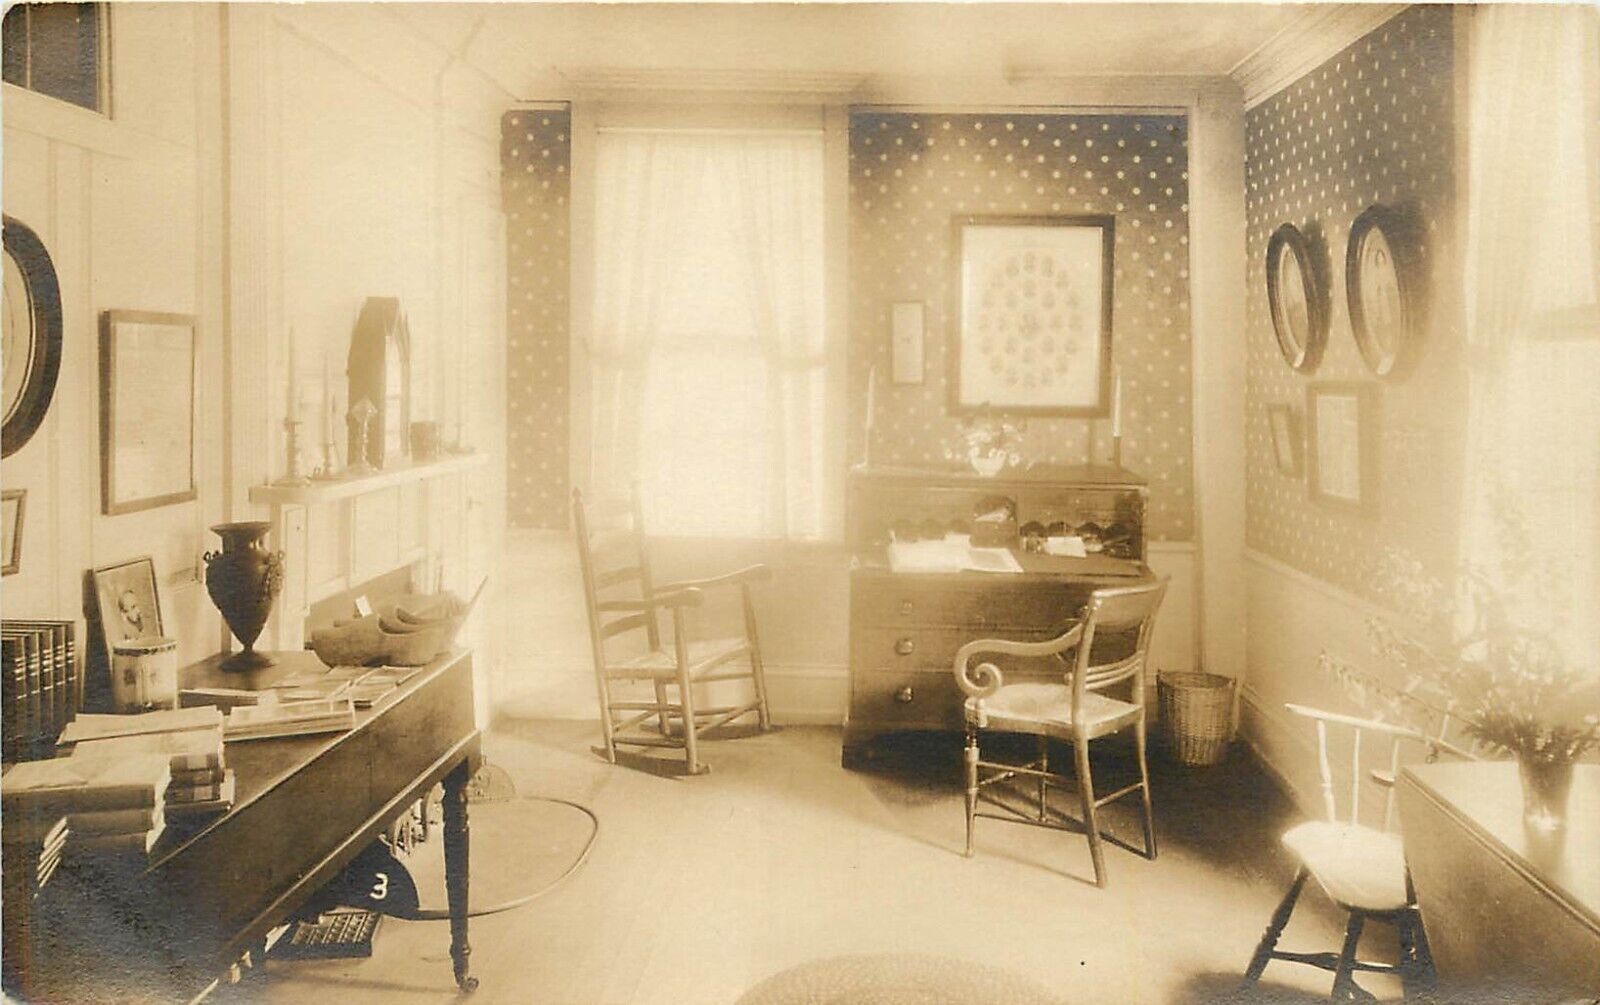 RPPC Postcard Interior View of Study/ Sitting Room, Unknown US Location, c1930?